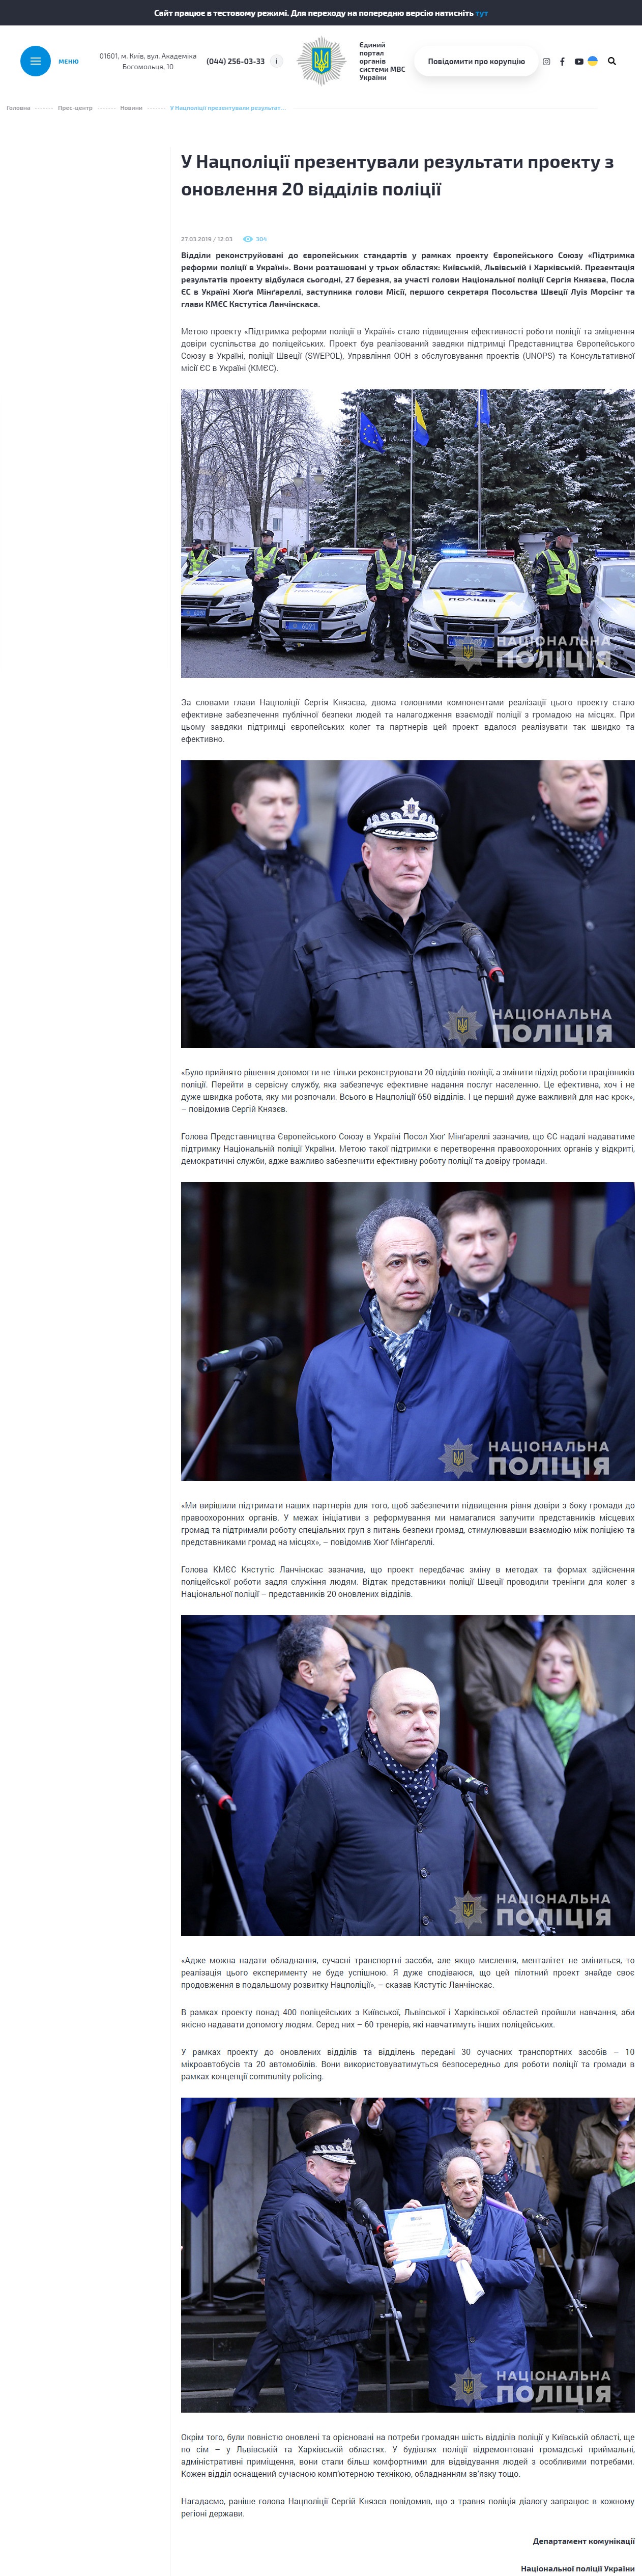 https://www.kmu.gov.ua/ua/news/u-nacpoliciyi-prezentuvali-rezultati-proektu-z-onovlennya-20-viddiliv-policiyi